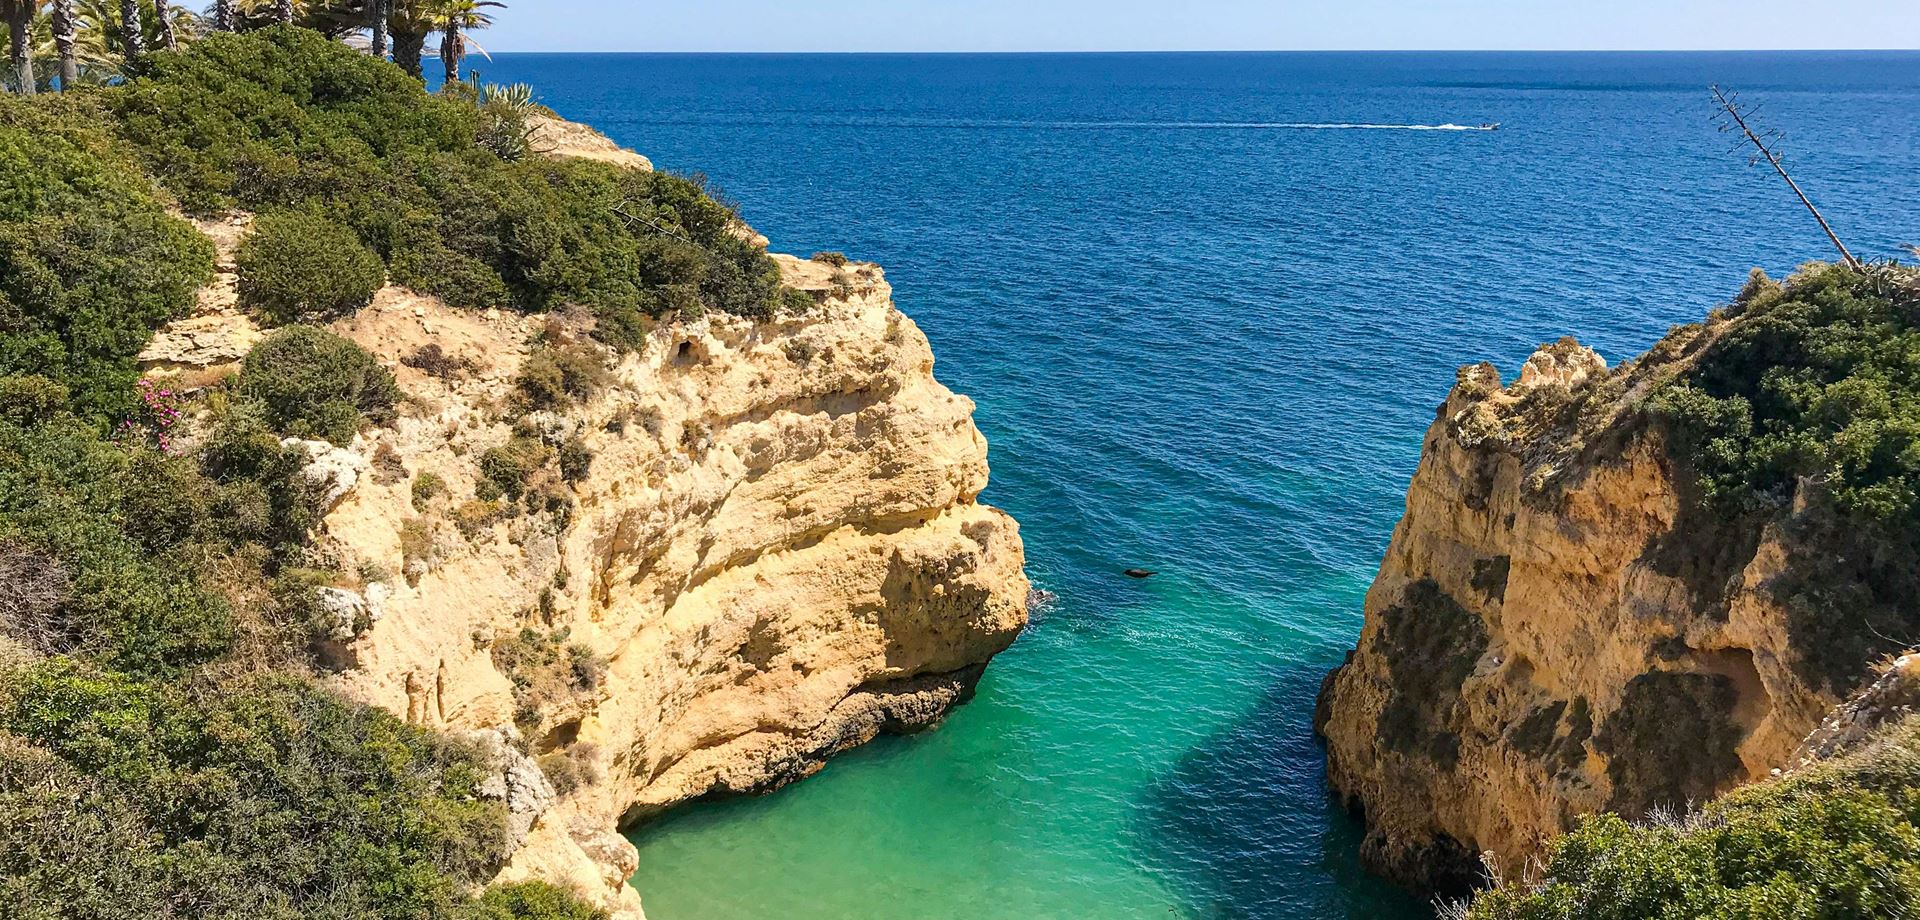 5 warmest beaches in the Algarve